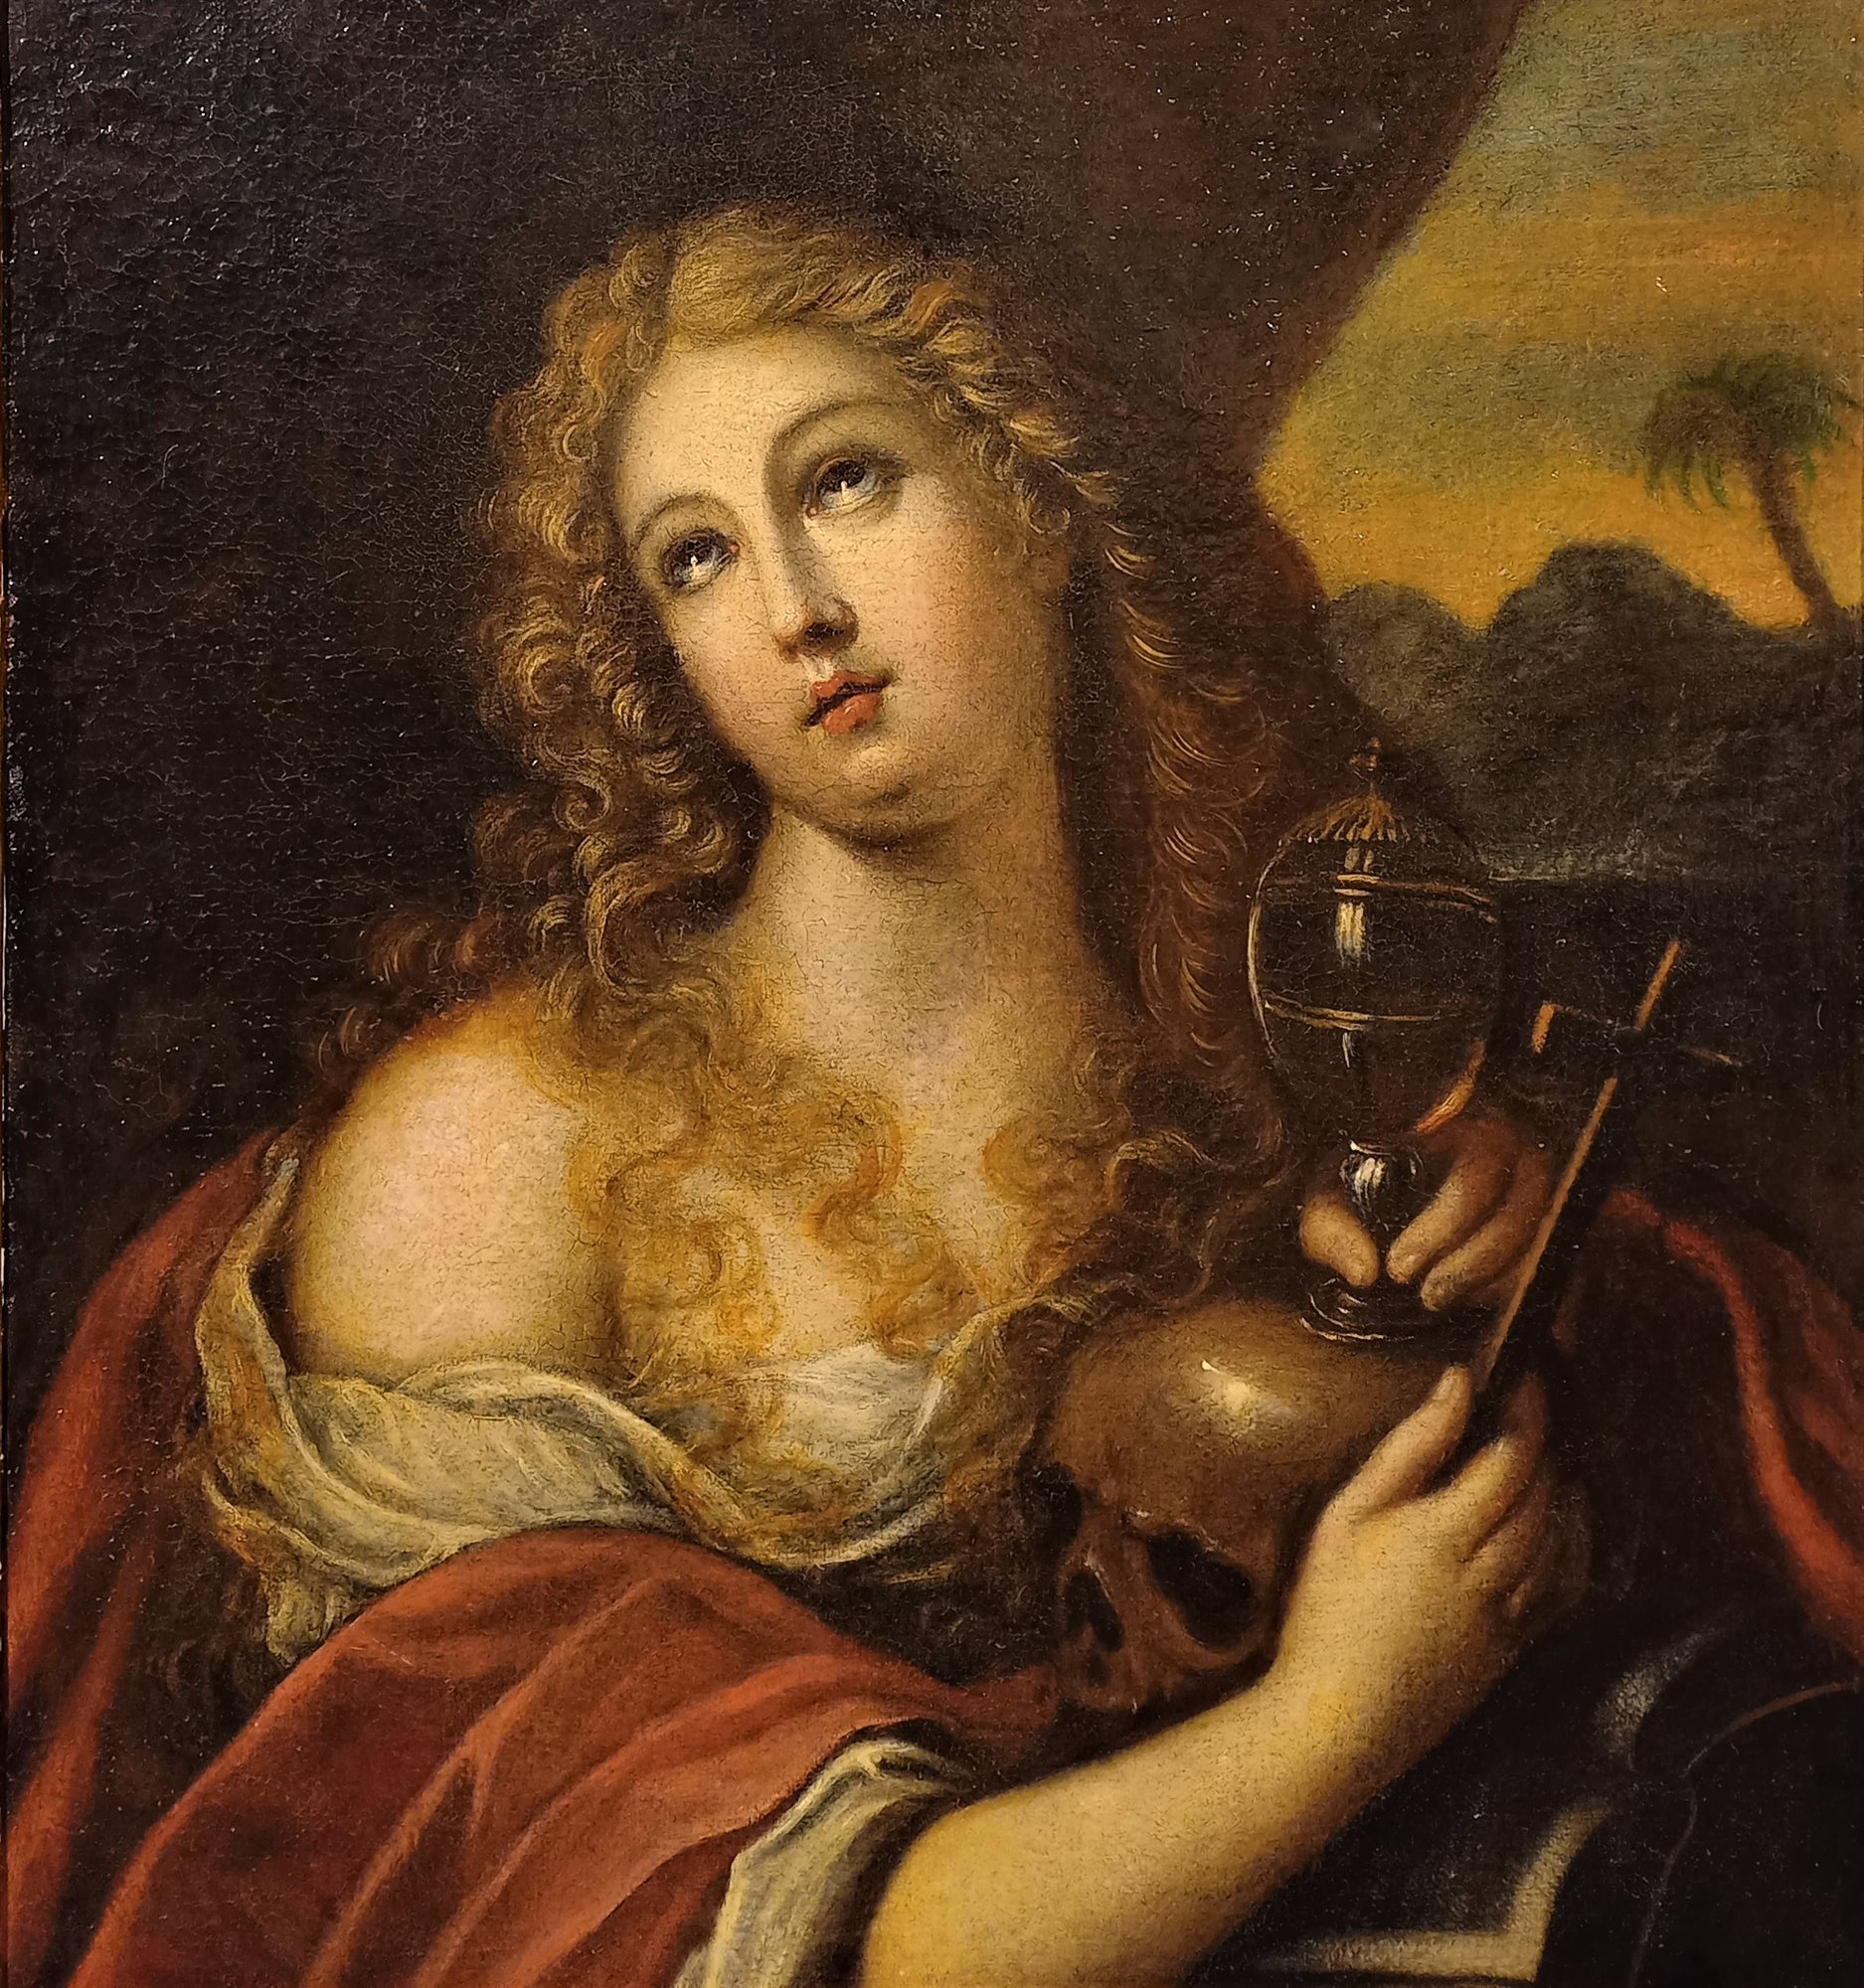 "Maria Maddalena"